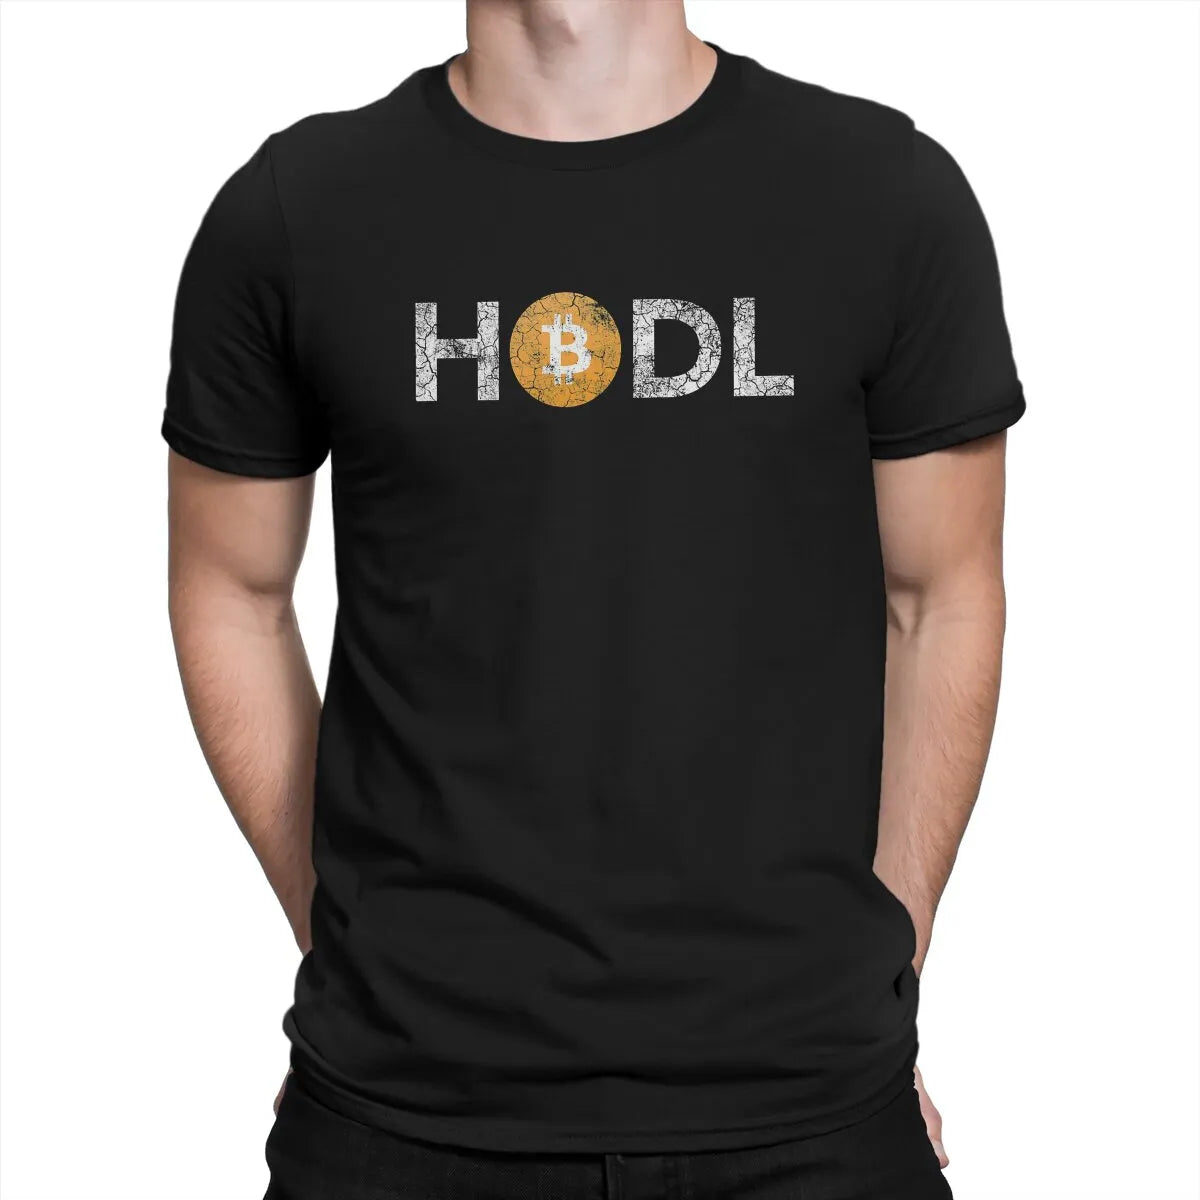 Bitcoin Vintage HODL T-Shirt For OGs